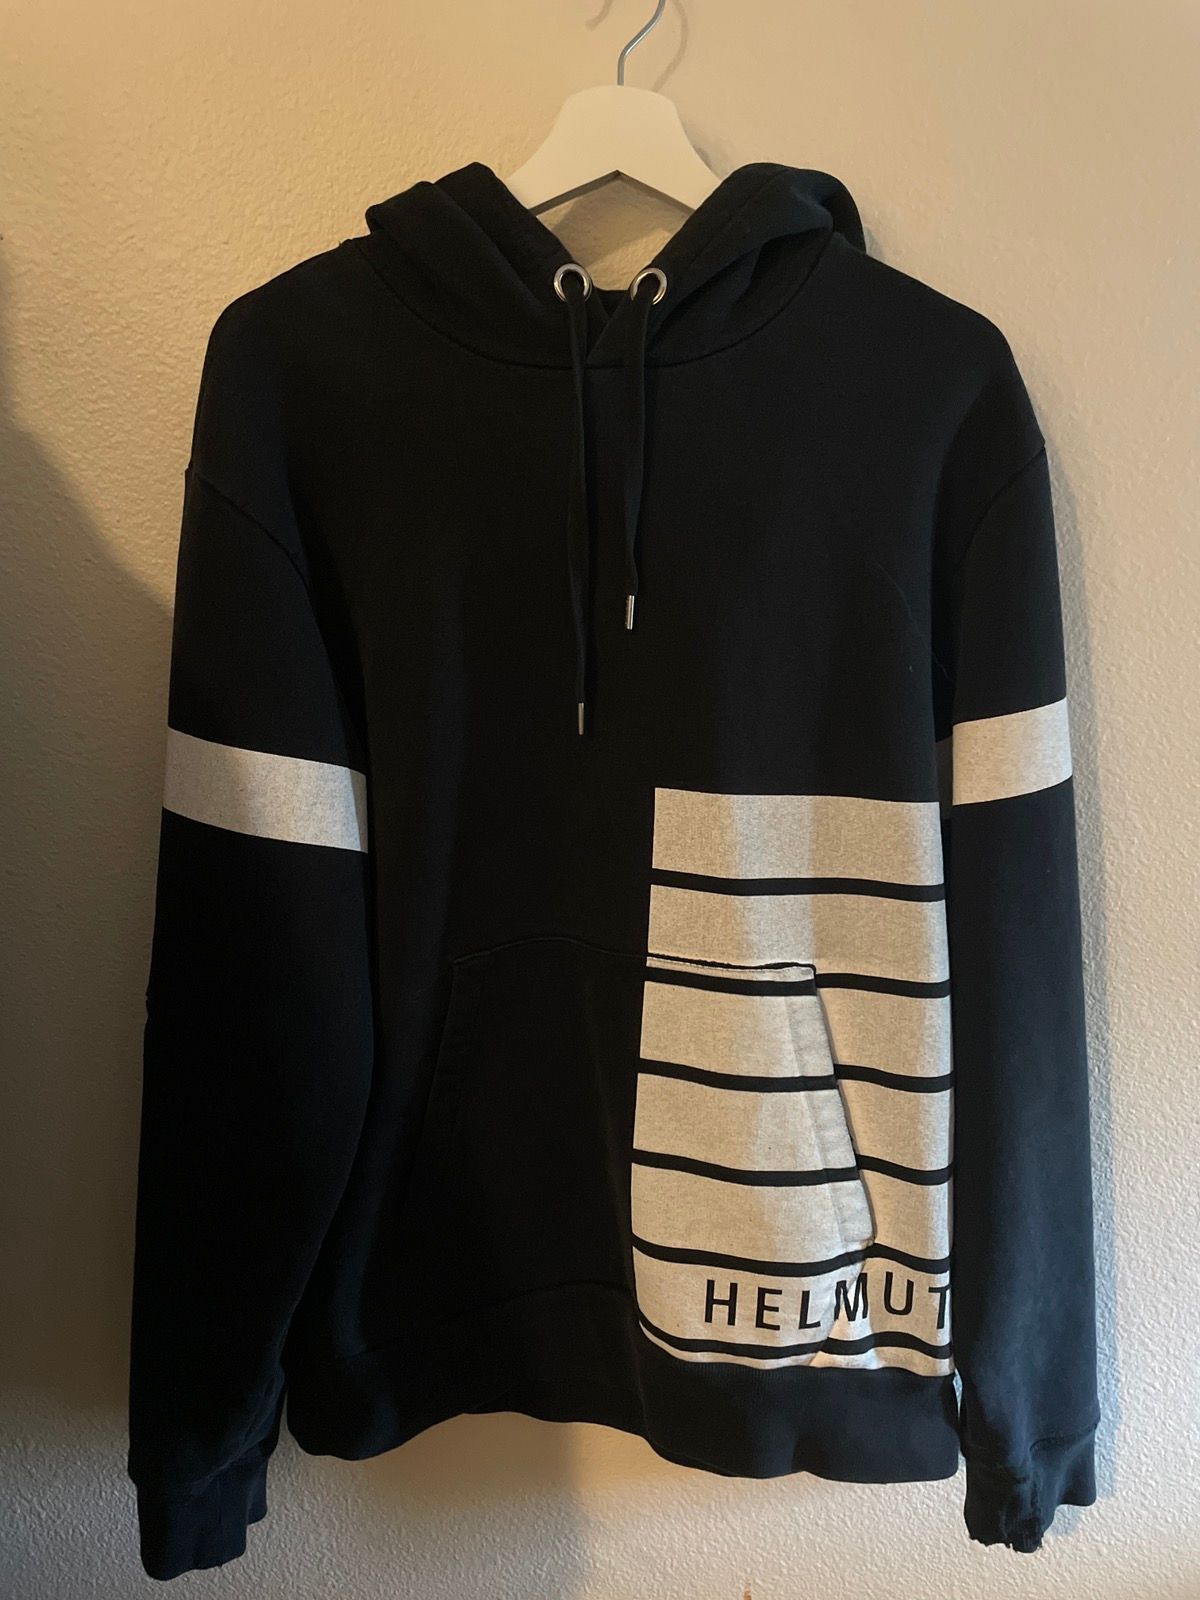 Helmut Lang Helmut Lang Logo Striped Hoodie | Grailed